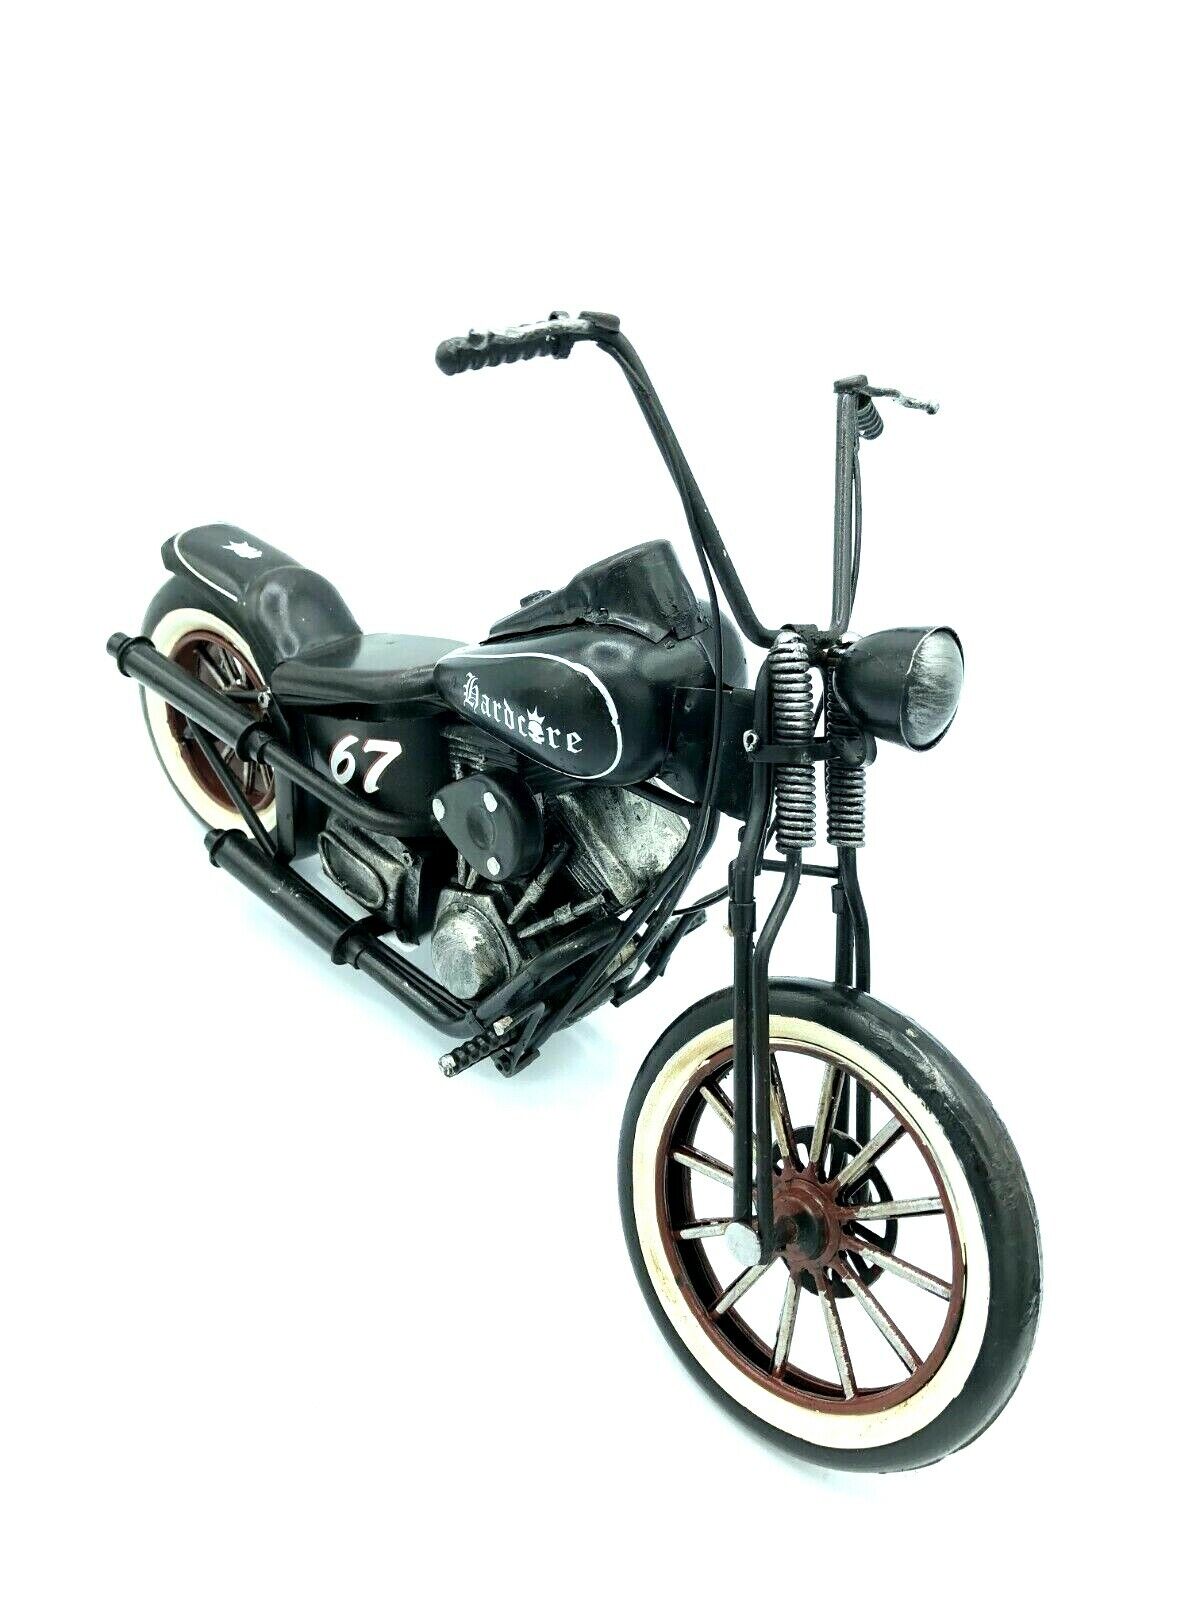 Hardcore 67 Chopper Motorcycle